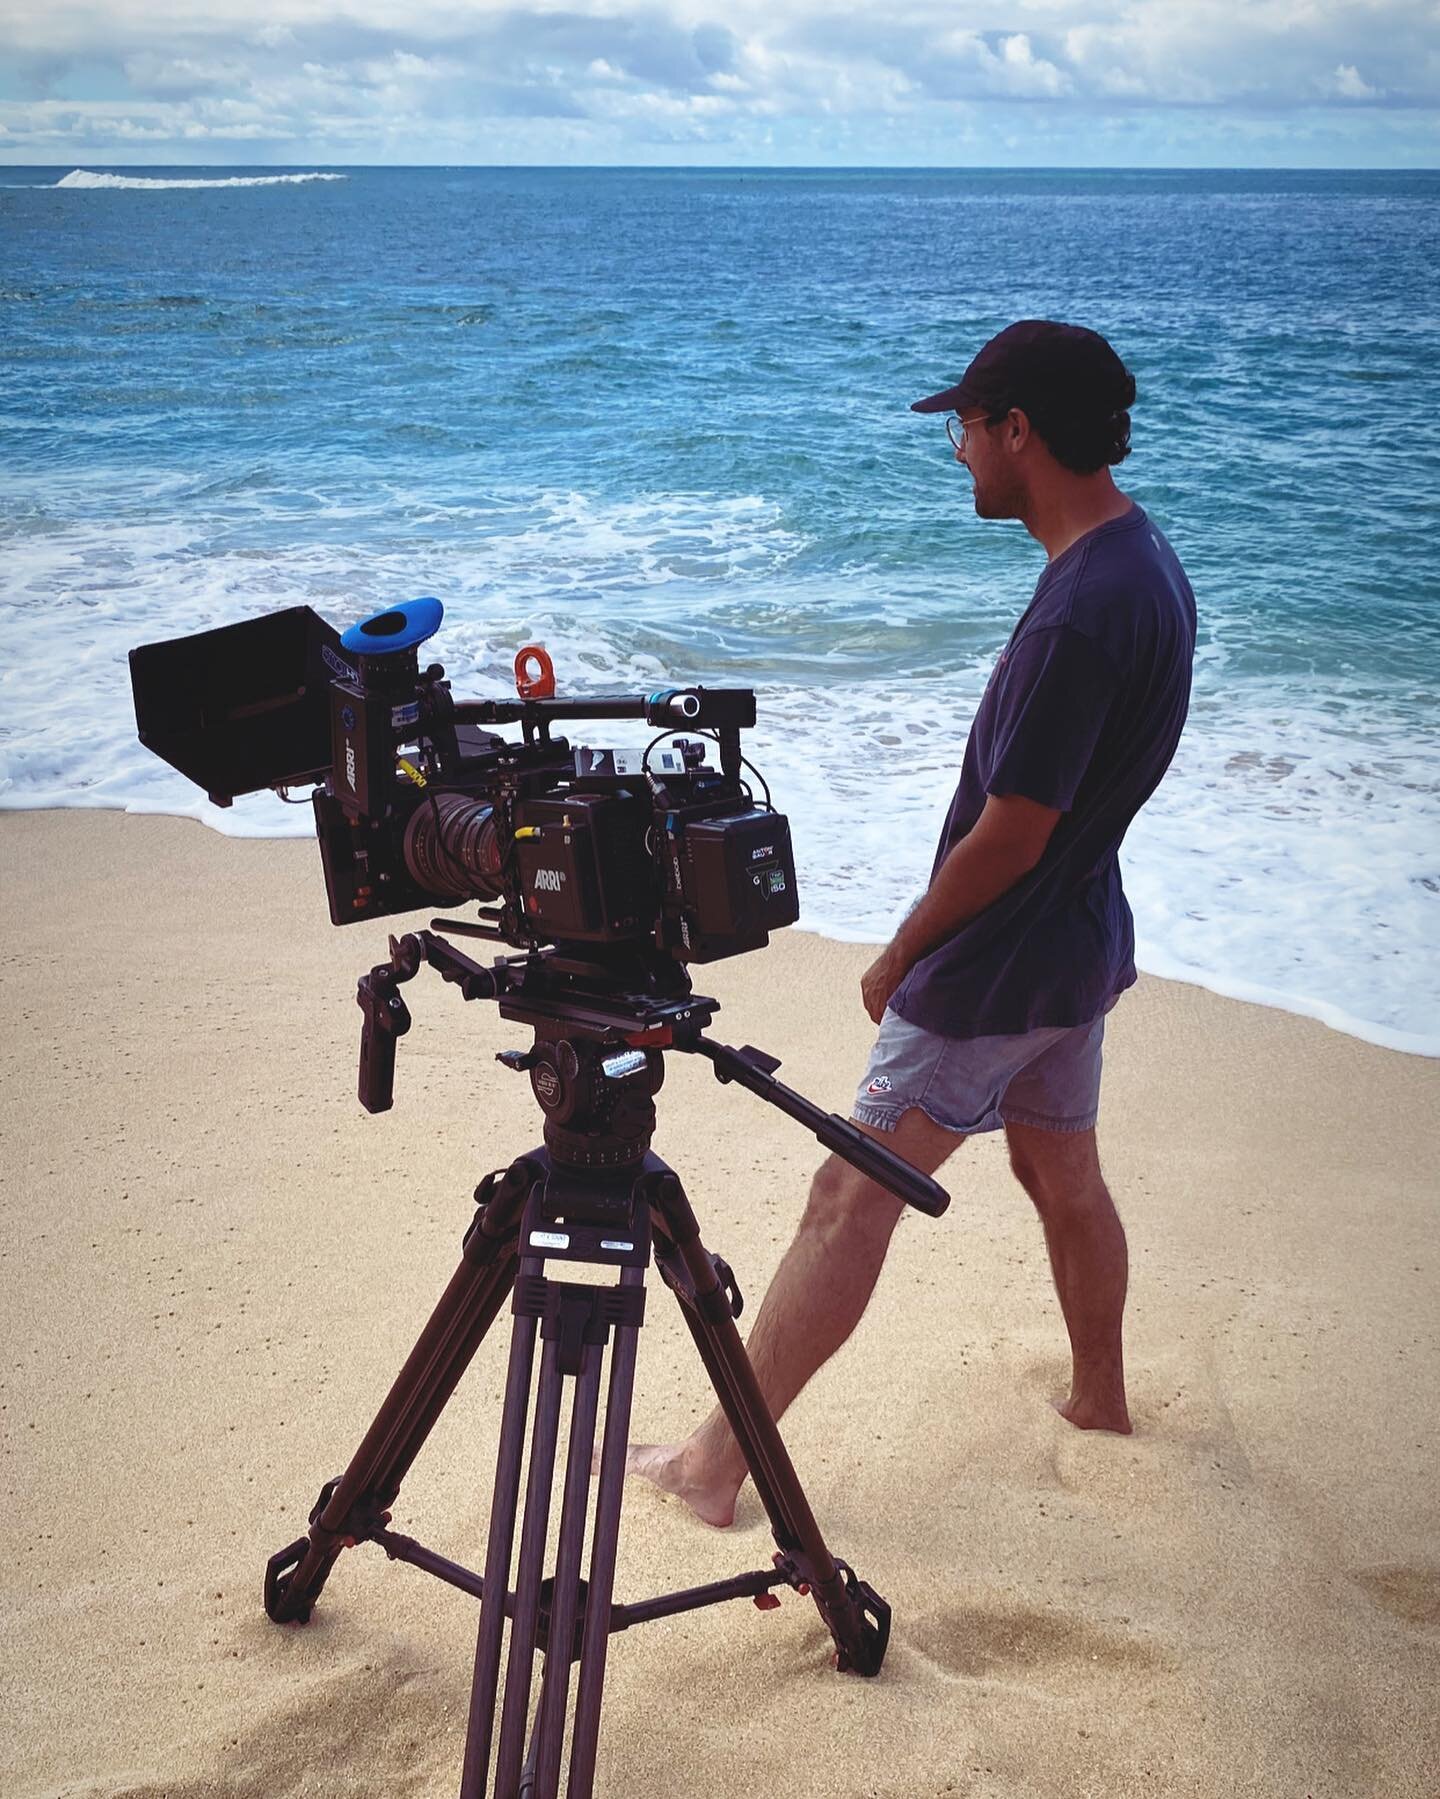 Hawaii beaches are the best beaches.  #minilf #lupe_theLF 
.
.
.
#production #onlocation #cameragear #camera #camerarig #alexa #arri #LF #setlife #travel #wonderlist #cinematography #cameradept #atx #360studios